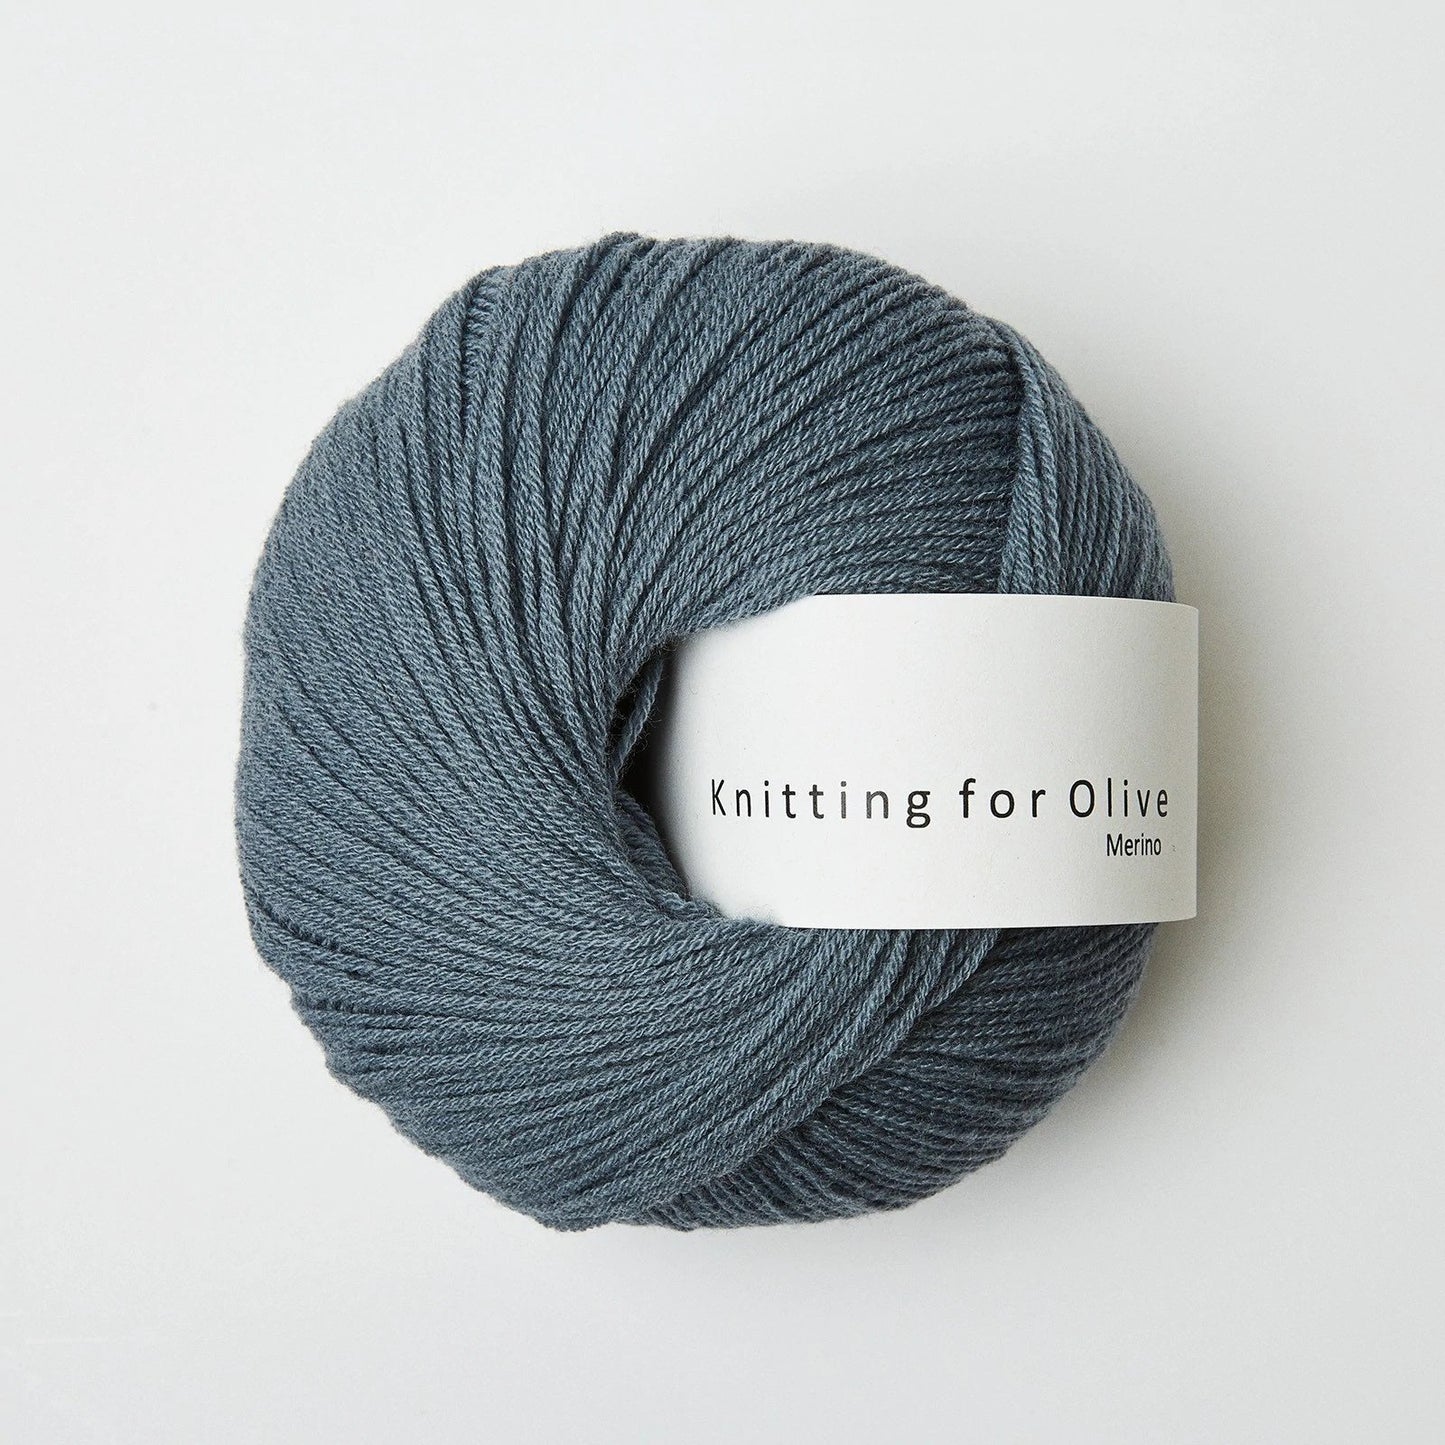 knitting for olive merino 50g dusty petroleum blue